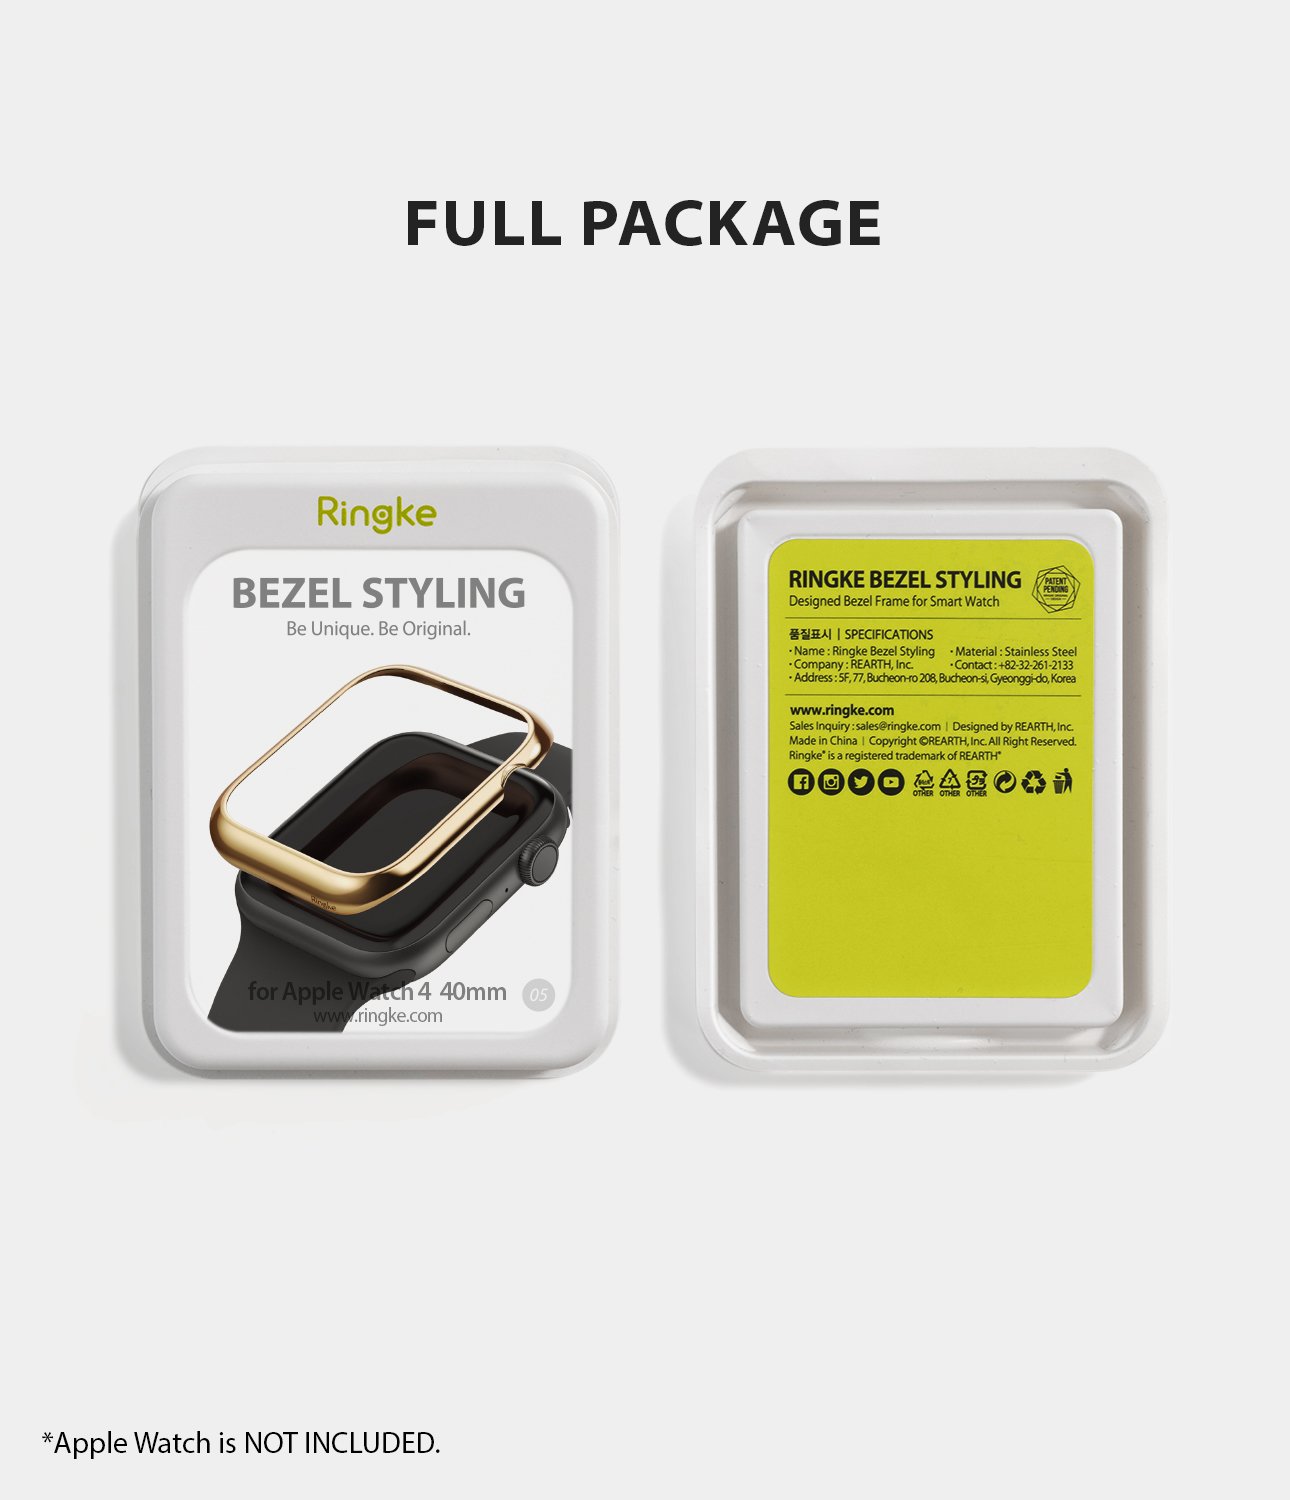 ringke bezel styling 40-05 glossy gold stainless steel on apple watch series 6 / 5 / 4 / SE 40mm full package